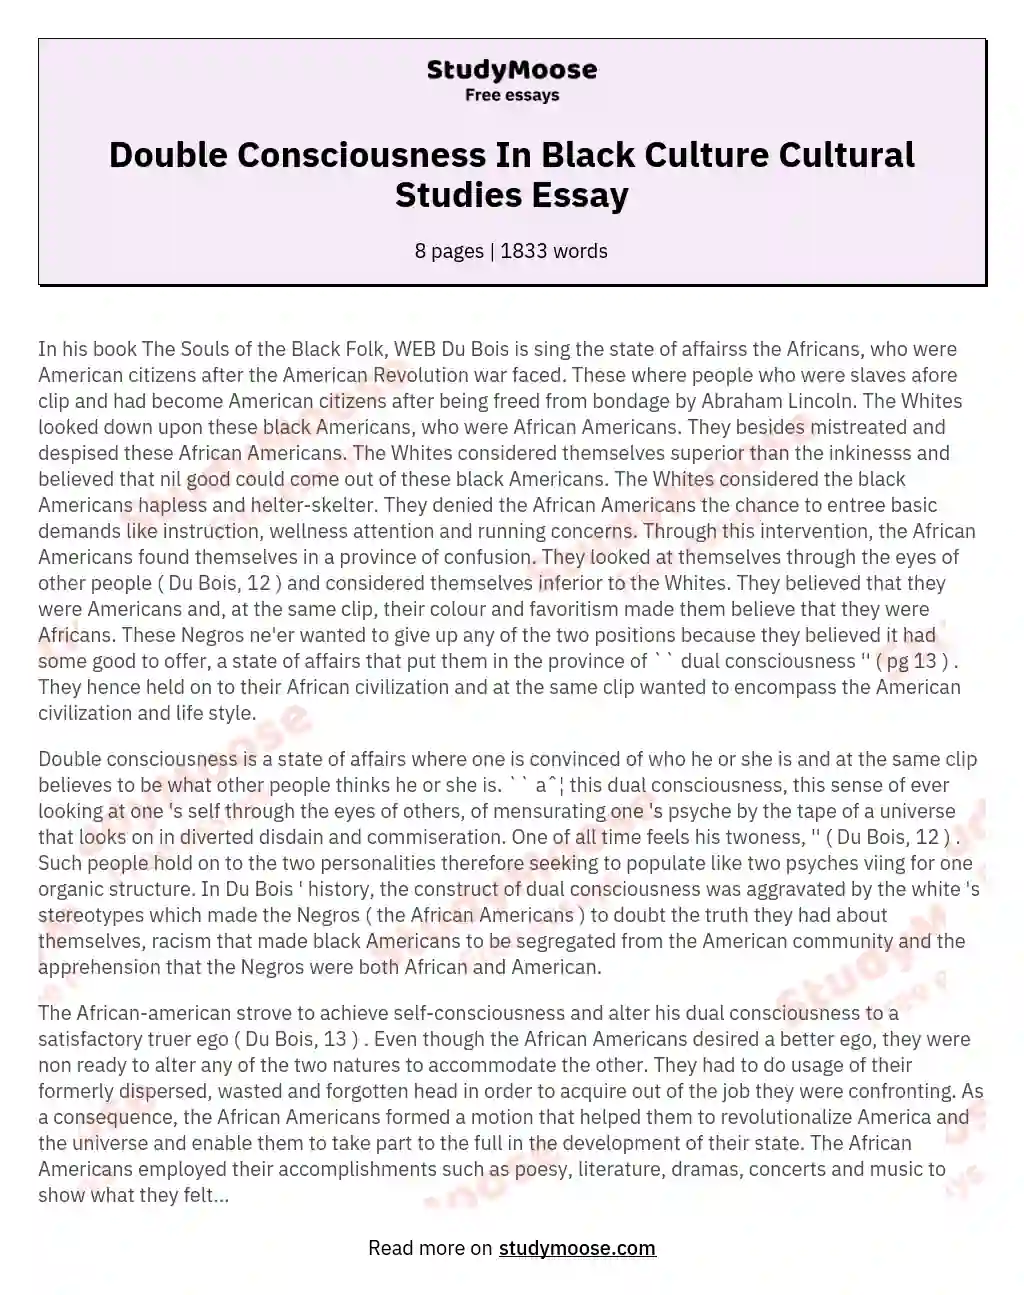 Double Consciousness In Black Culture Cultural Studies Essay essay